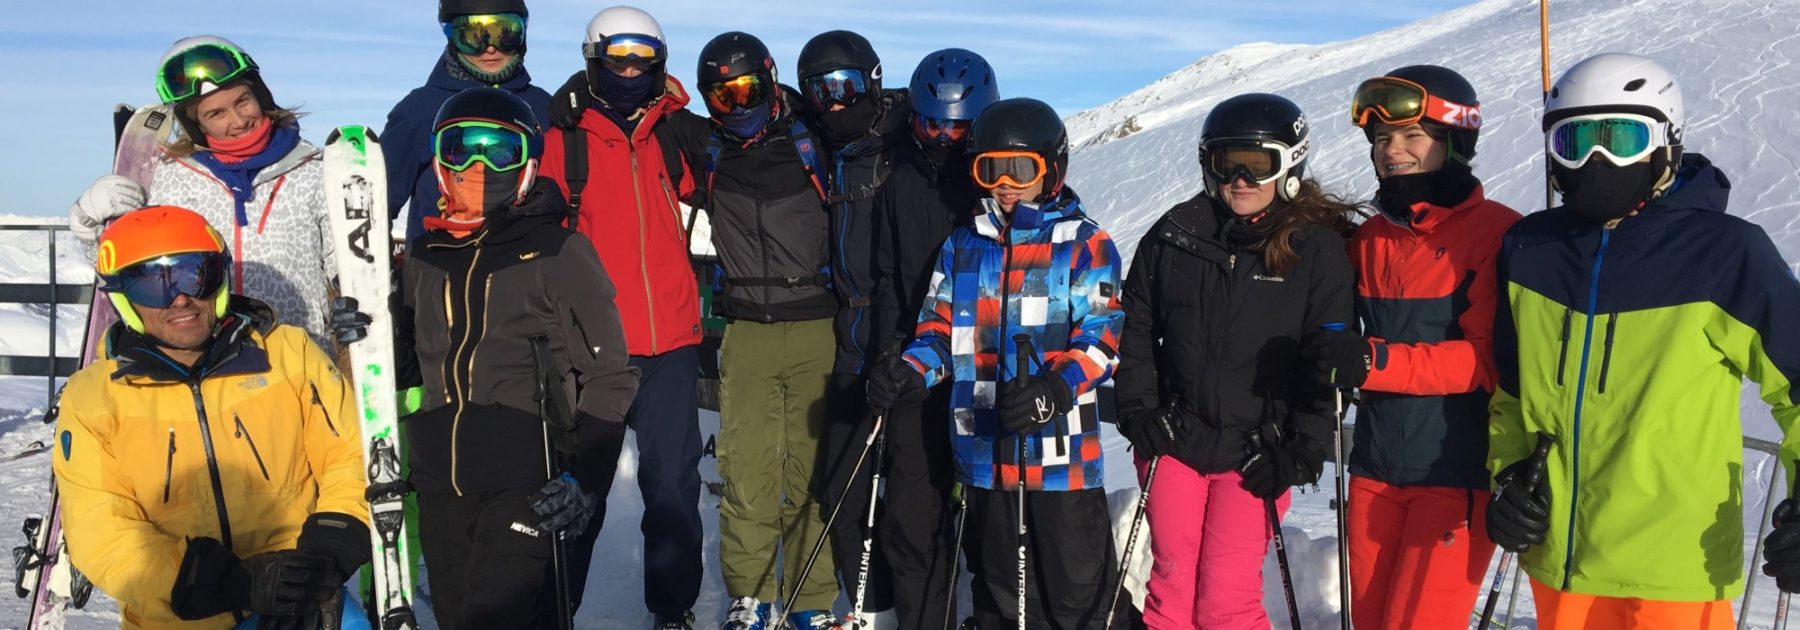 Independent Schools’ Ski Championships